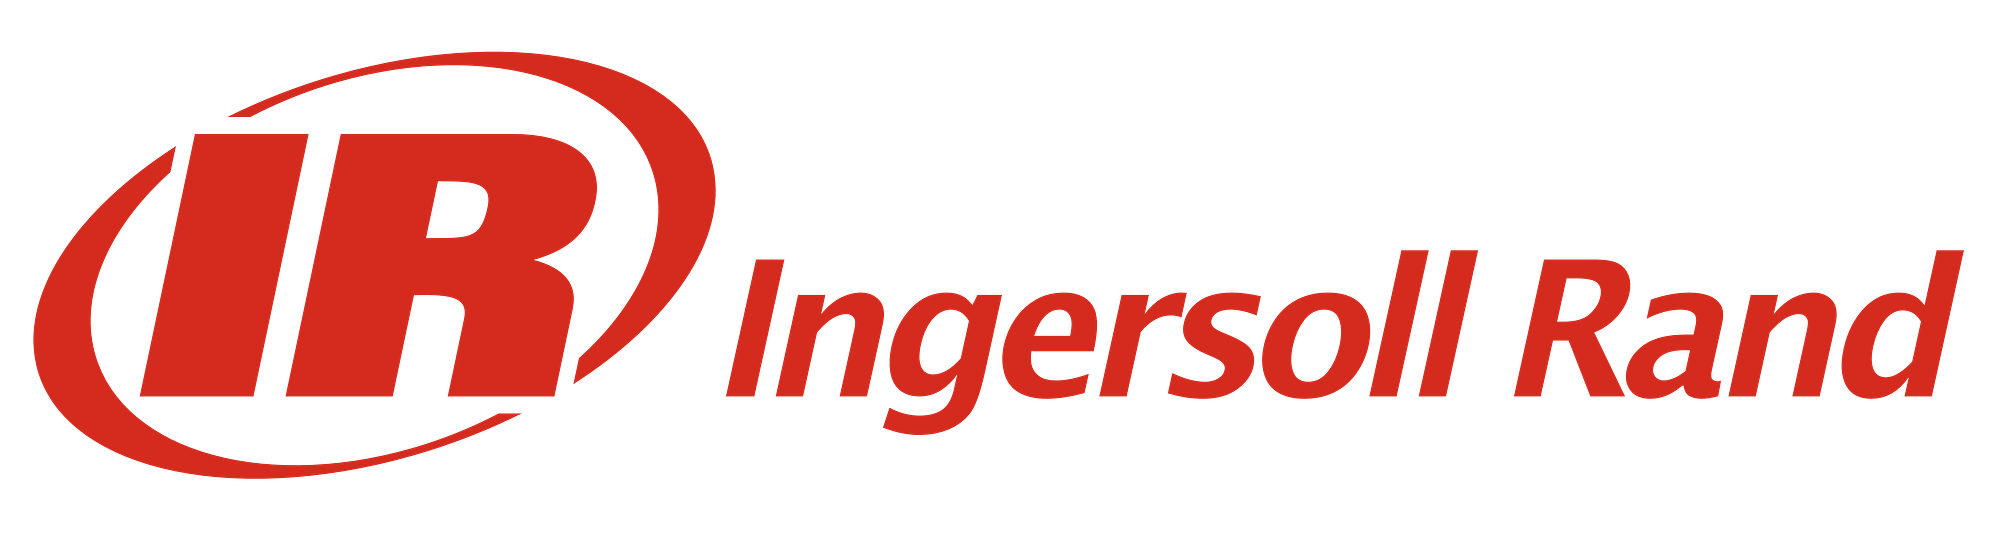 Ingersoll_Rand_logo